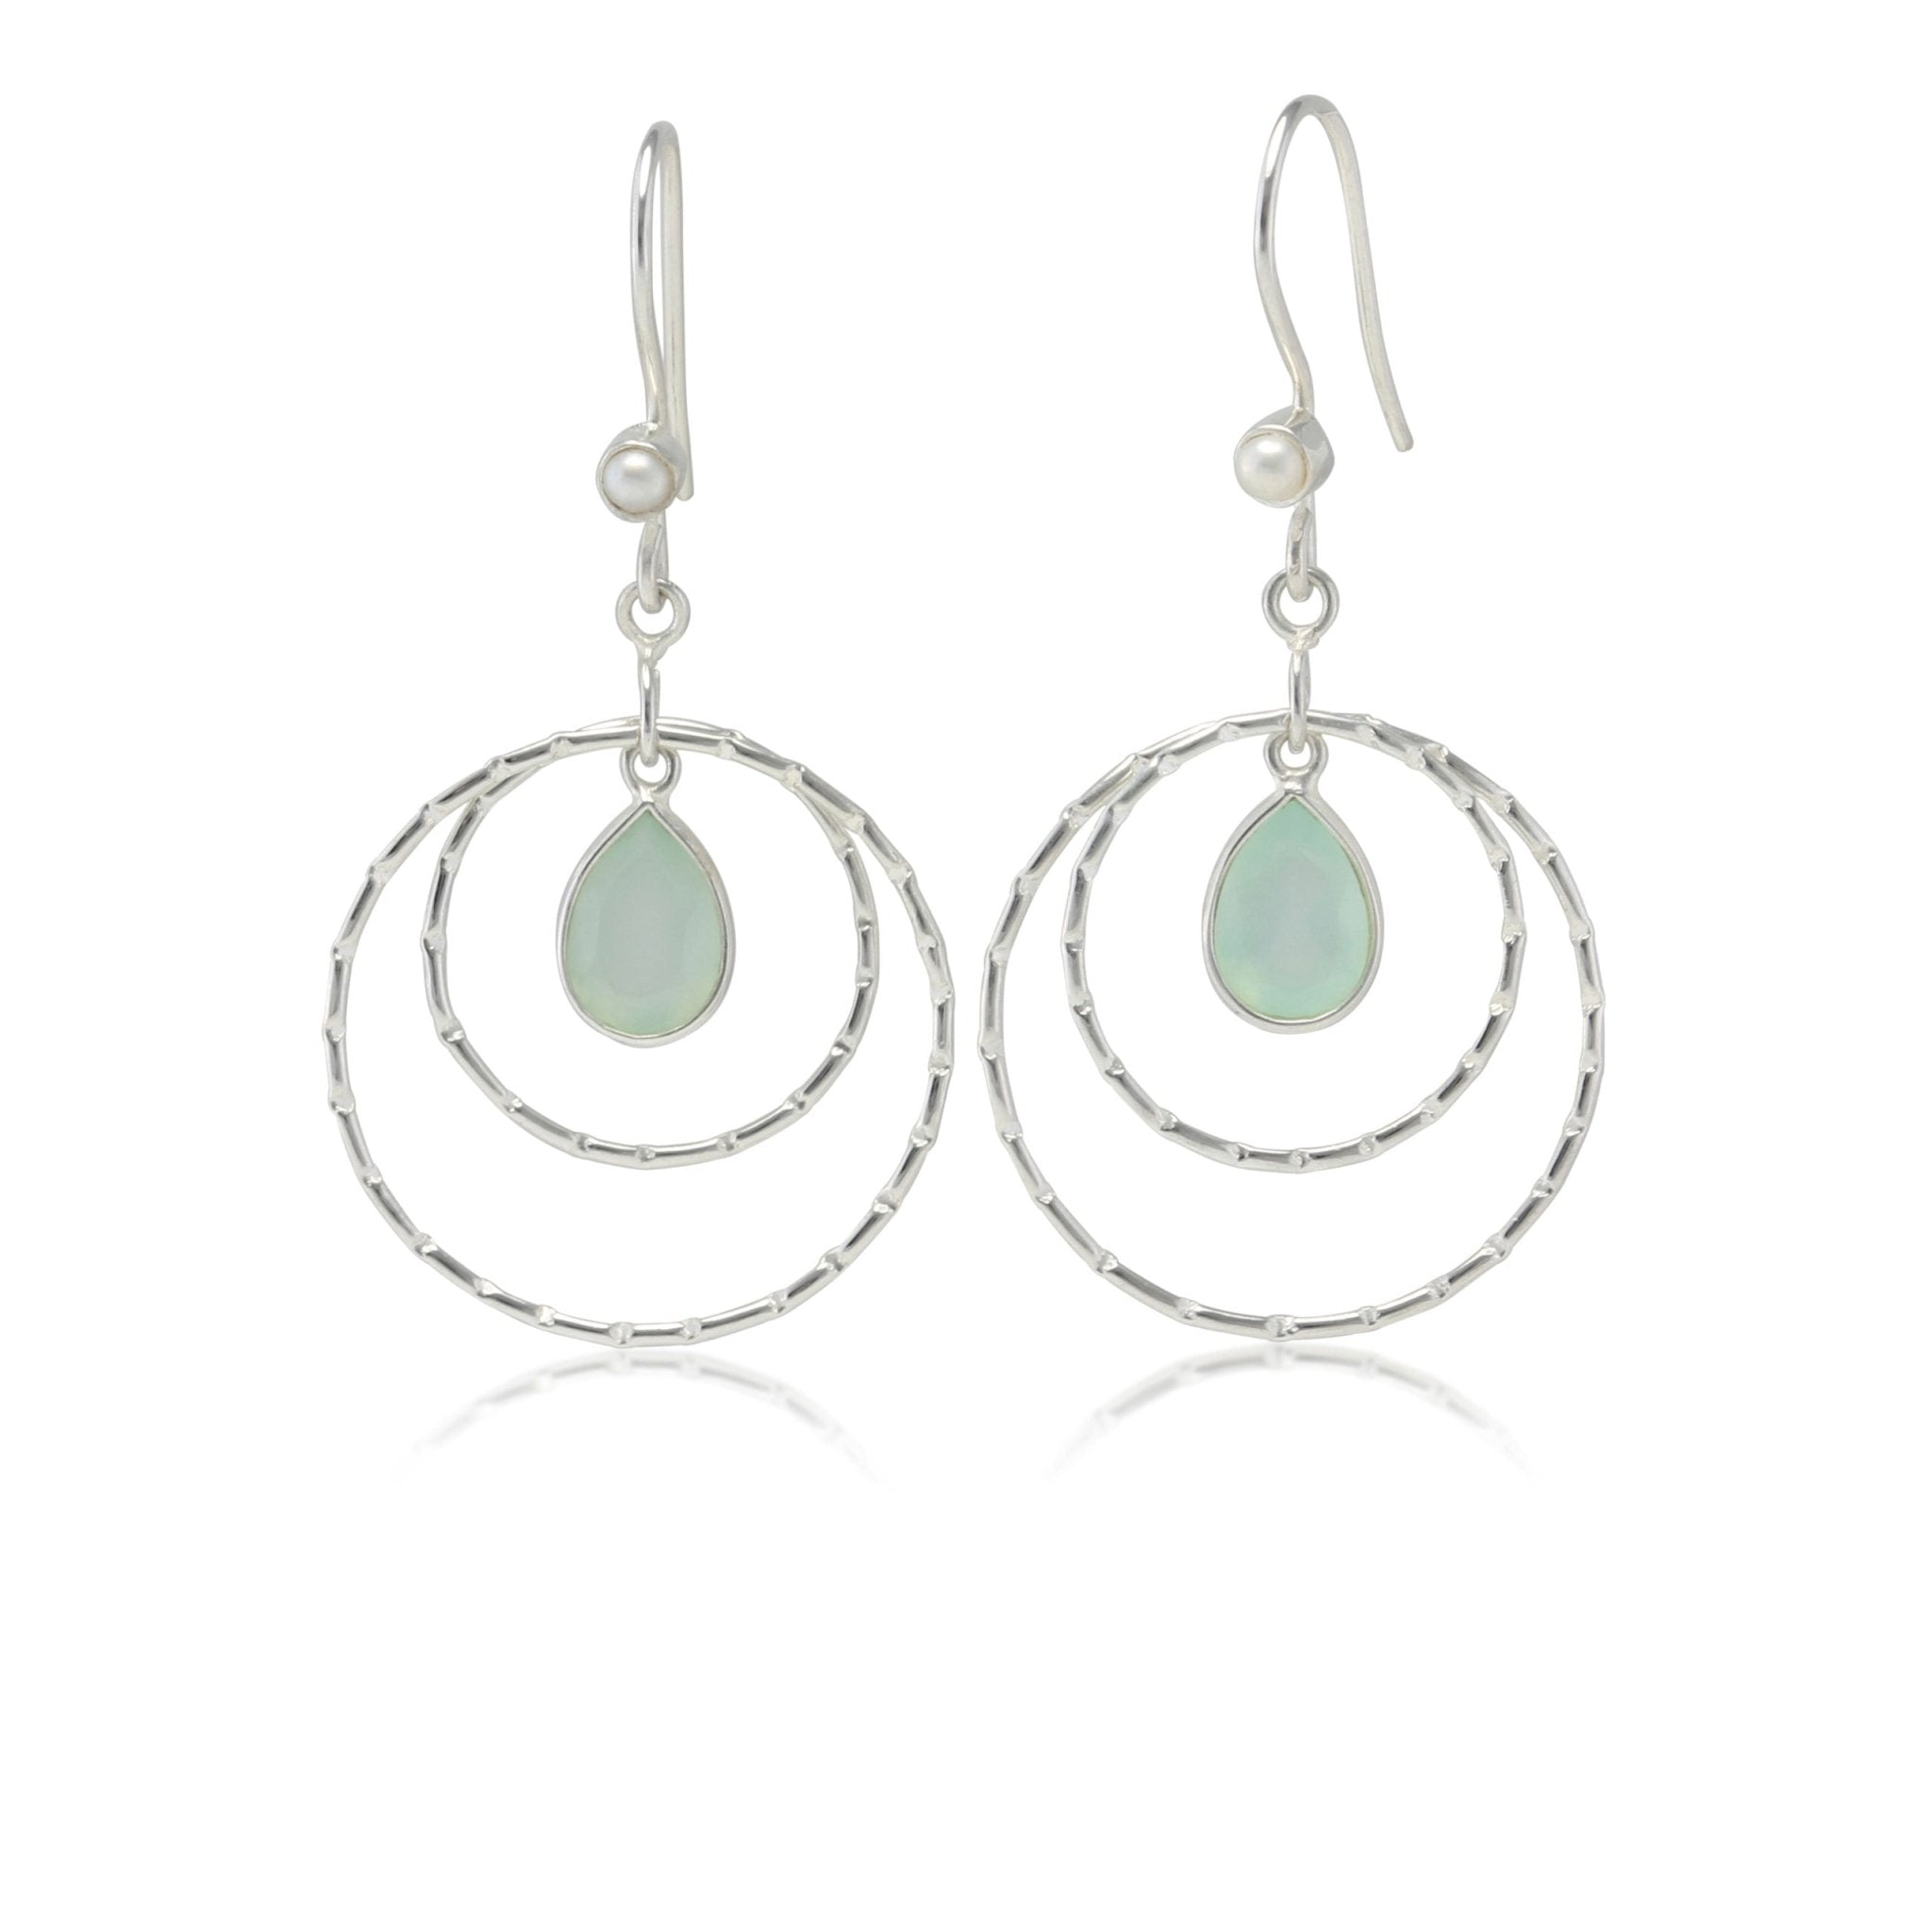 Aqua Chalcedony Drop Earrings - The Nancy Smillie Shop - Art, Jewellery & Designer Gifts Glasgow